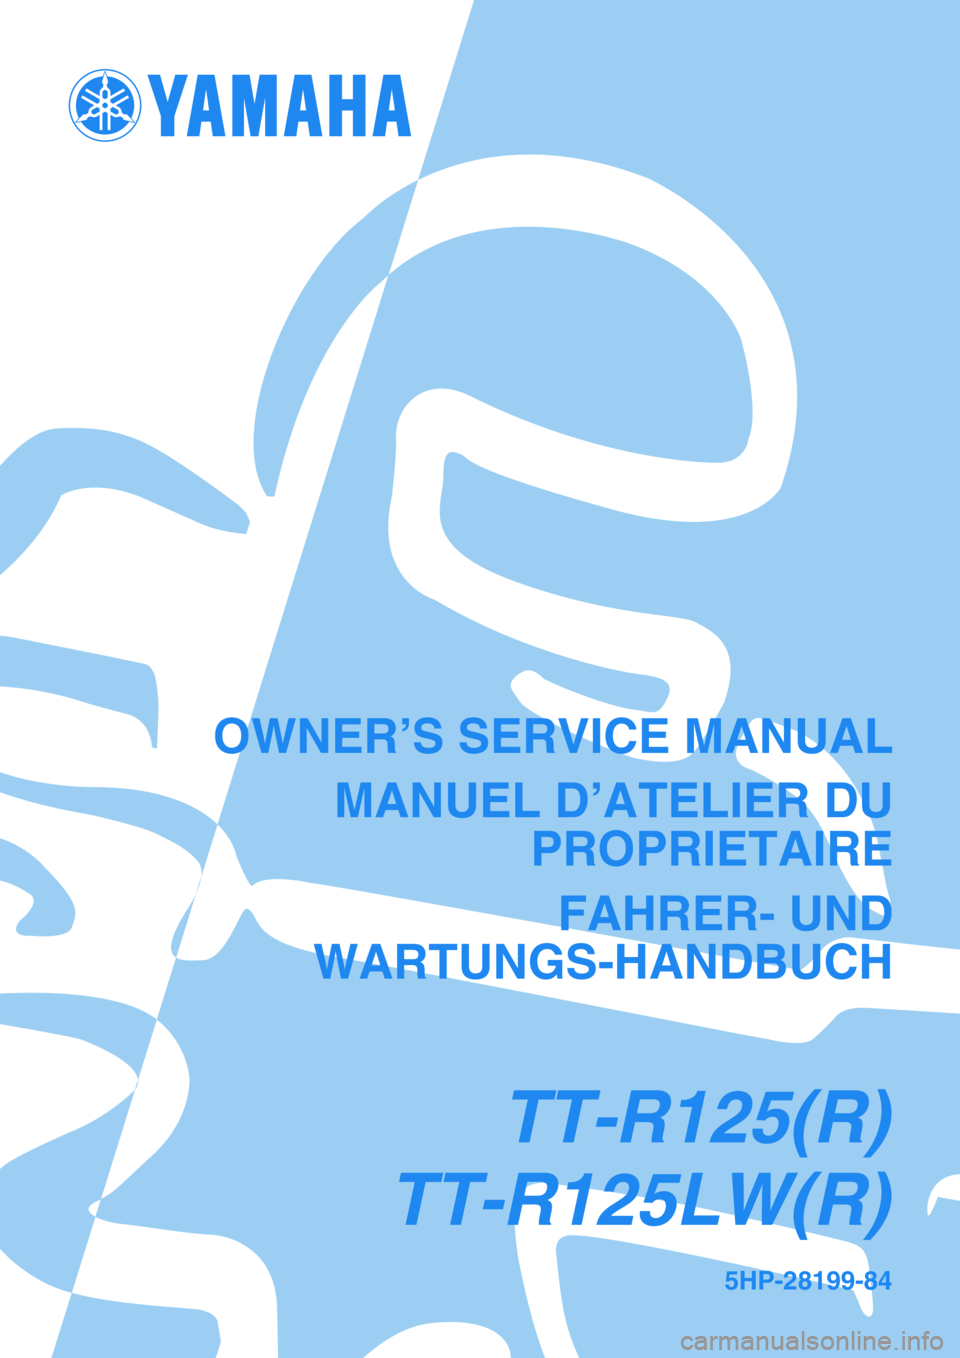 YAMAHA TTR125 2003  Notices Demploi (in French) 5HP-28199-84
OWNER’S SERVICE MANUAL
MANUEL D’ATELIER DU
PROPRIETAIRE
FAHRER- UND
WARTUNGS-HANDBUCH
TT-R125(R)
TT-R125LW(R) 